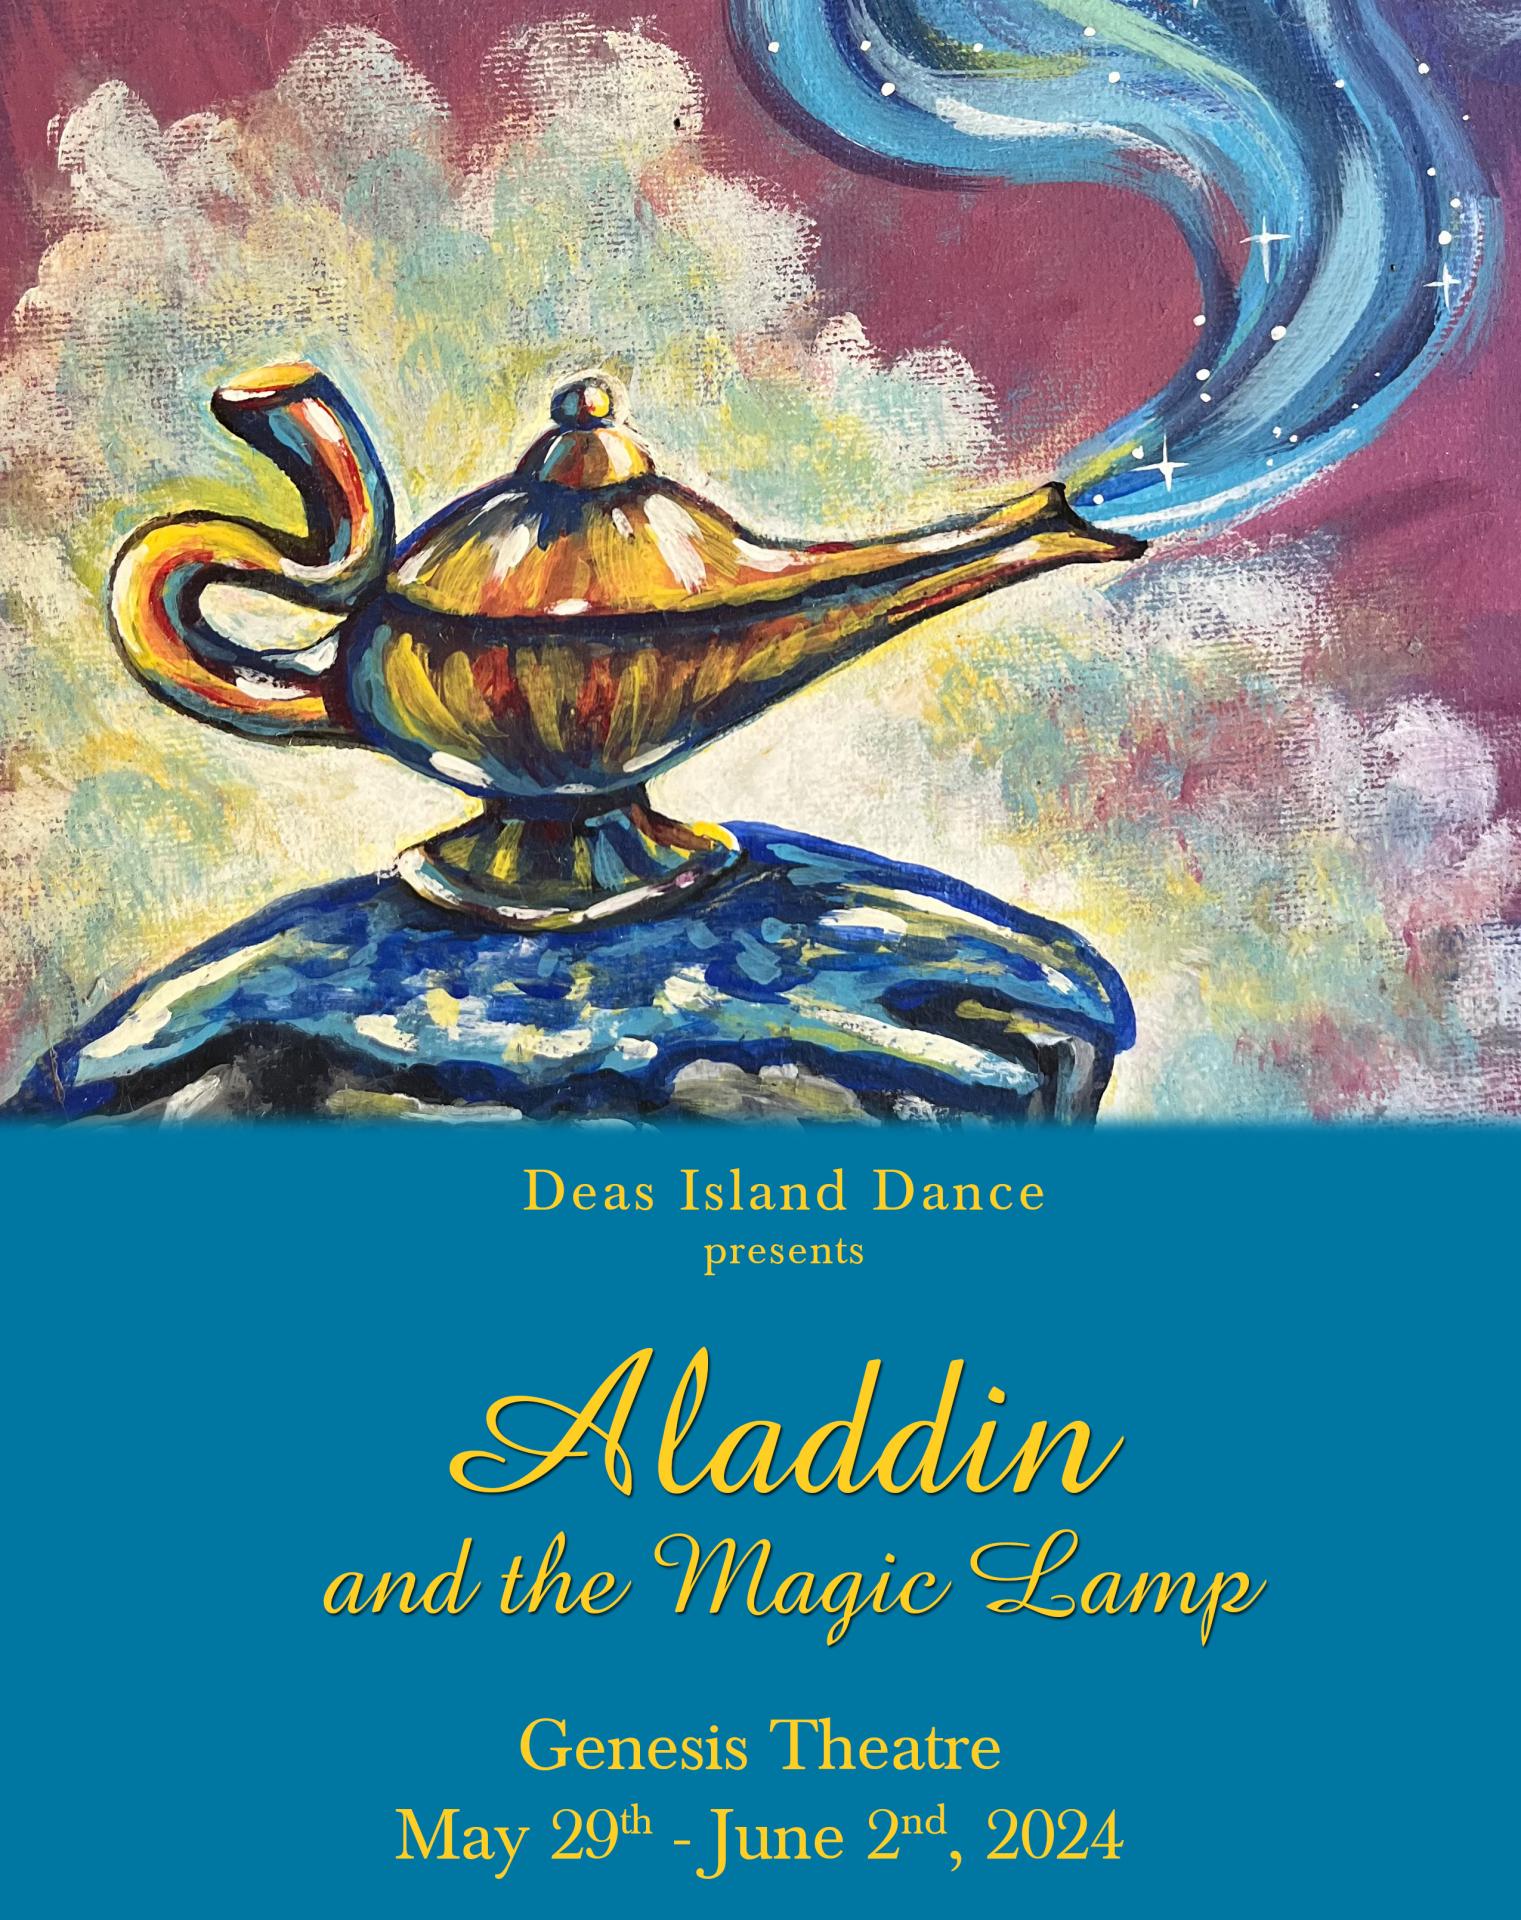 Deas Island Dance Presents: Aladdin (Evening)